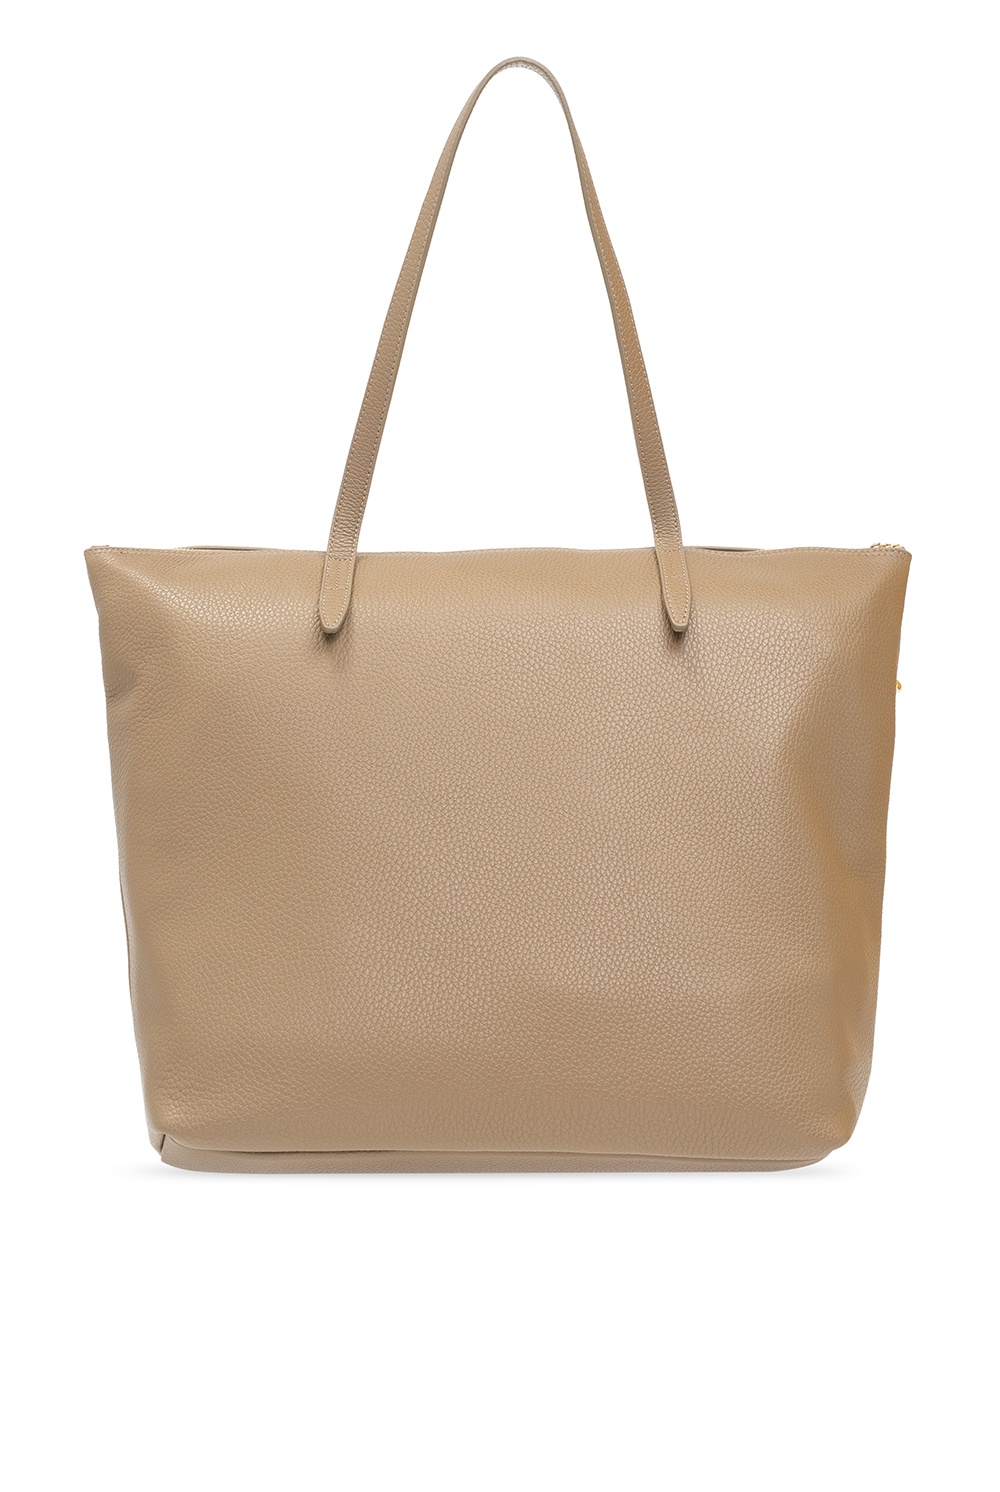 Fangu Womens Handbag Genuine Leather Tote Bag Fashion Shoulder Bag for Lady